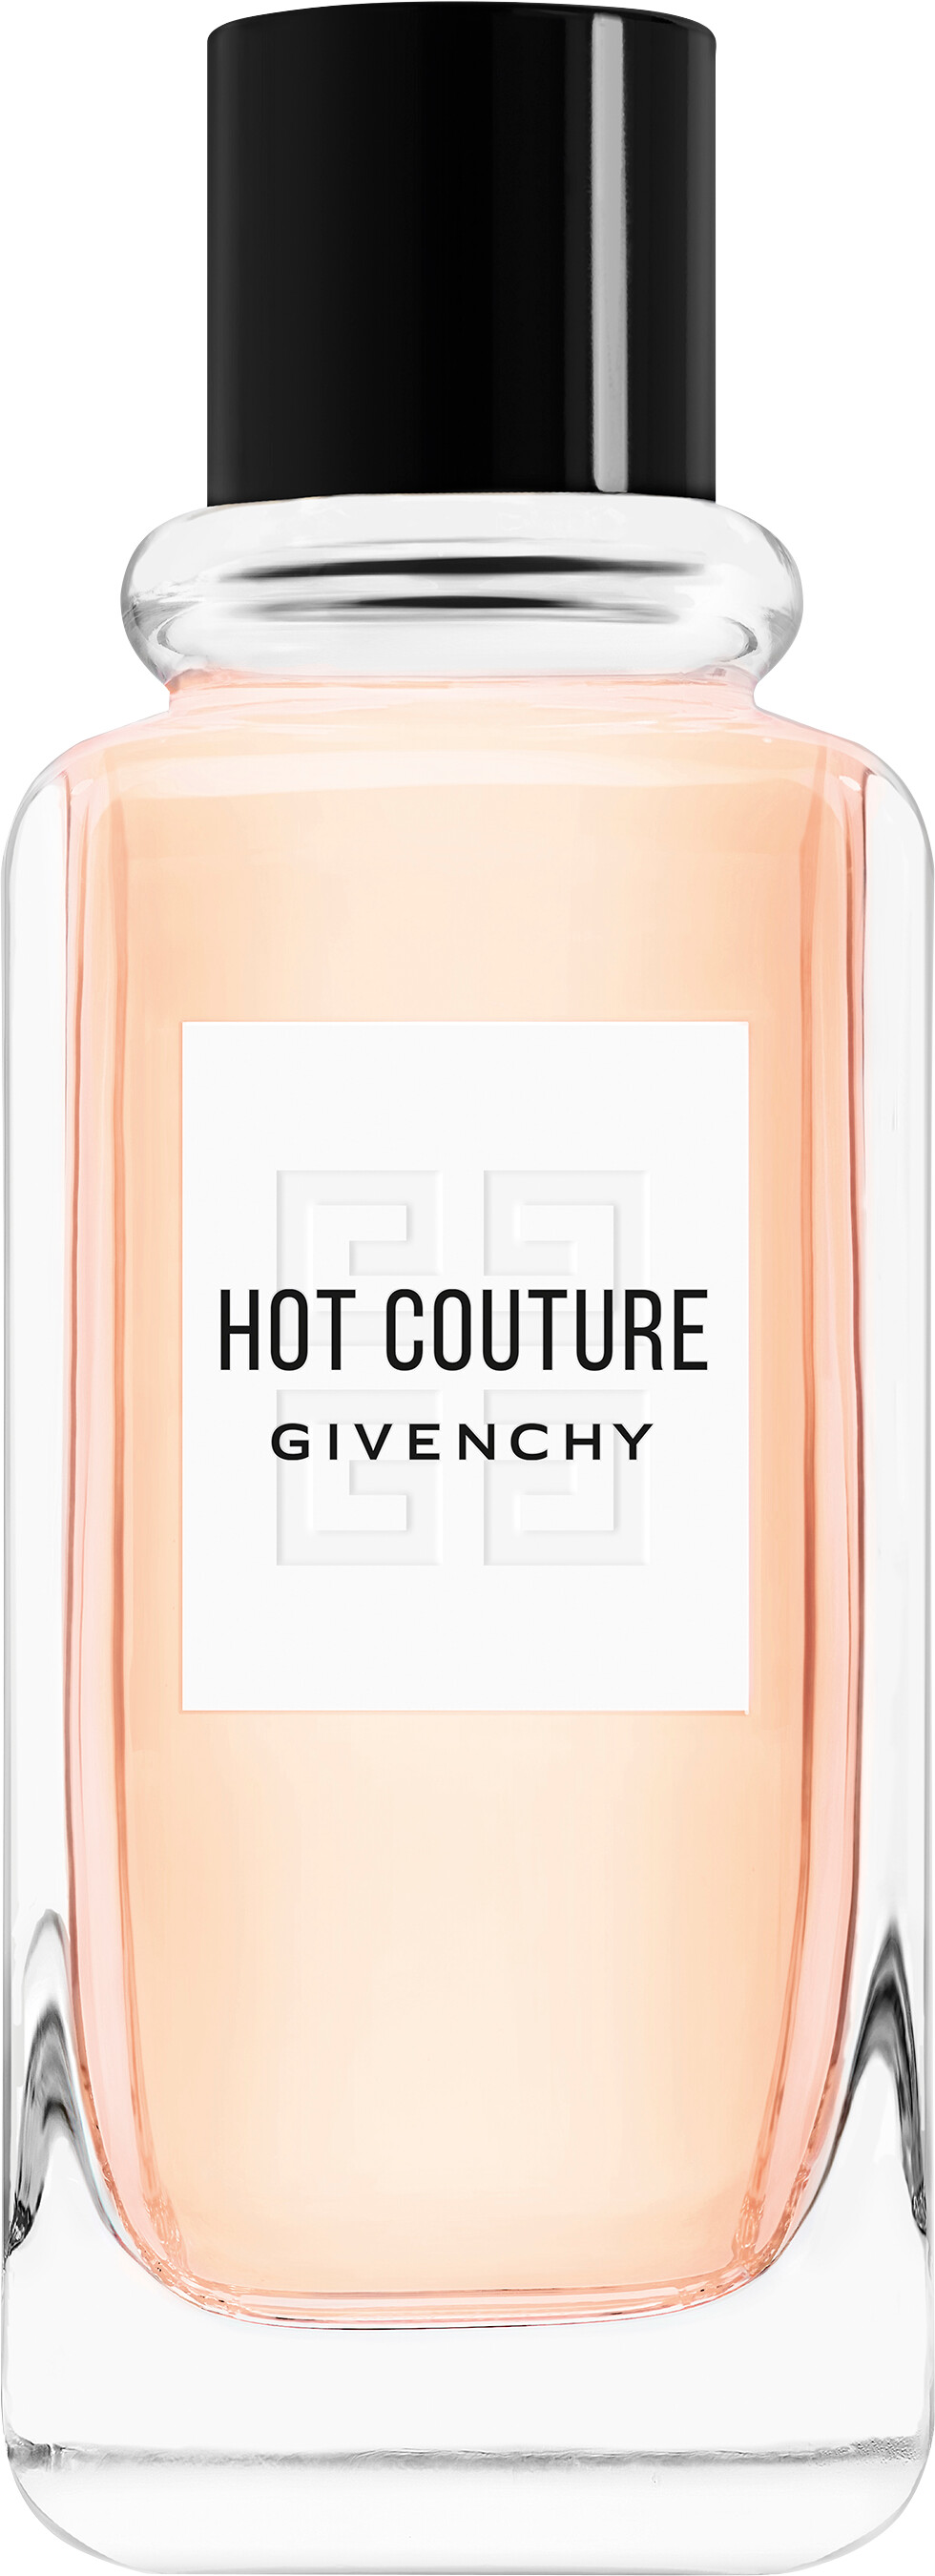 GIVENCHY Hot Couture Eau de Parfum Spray